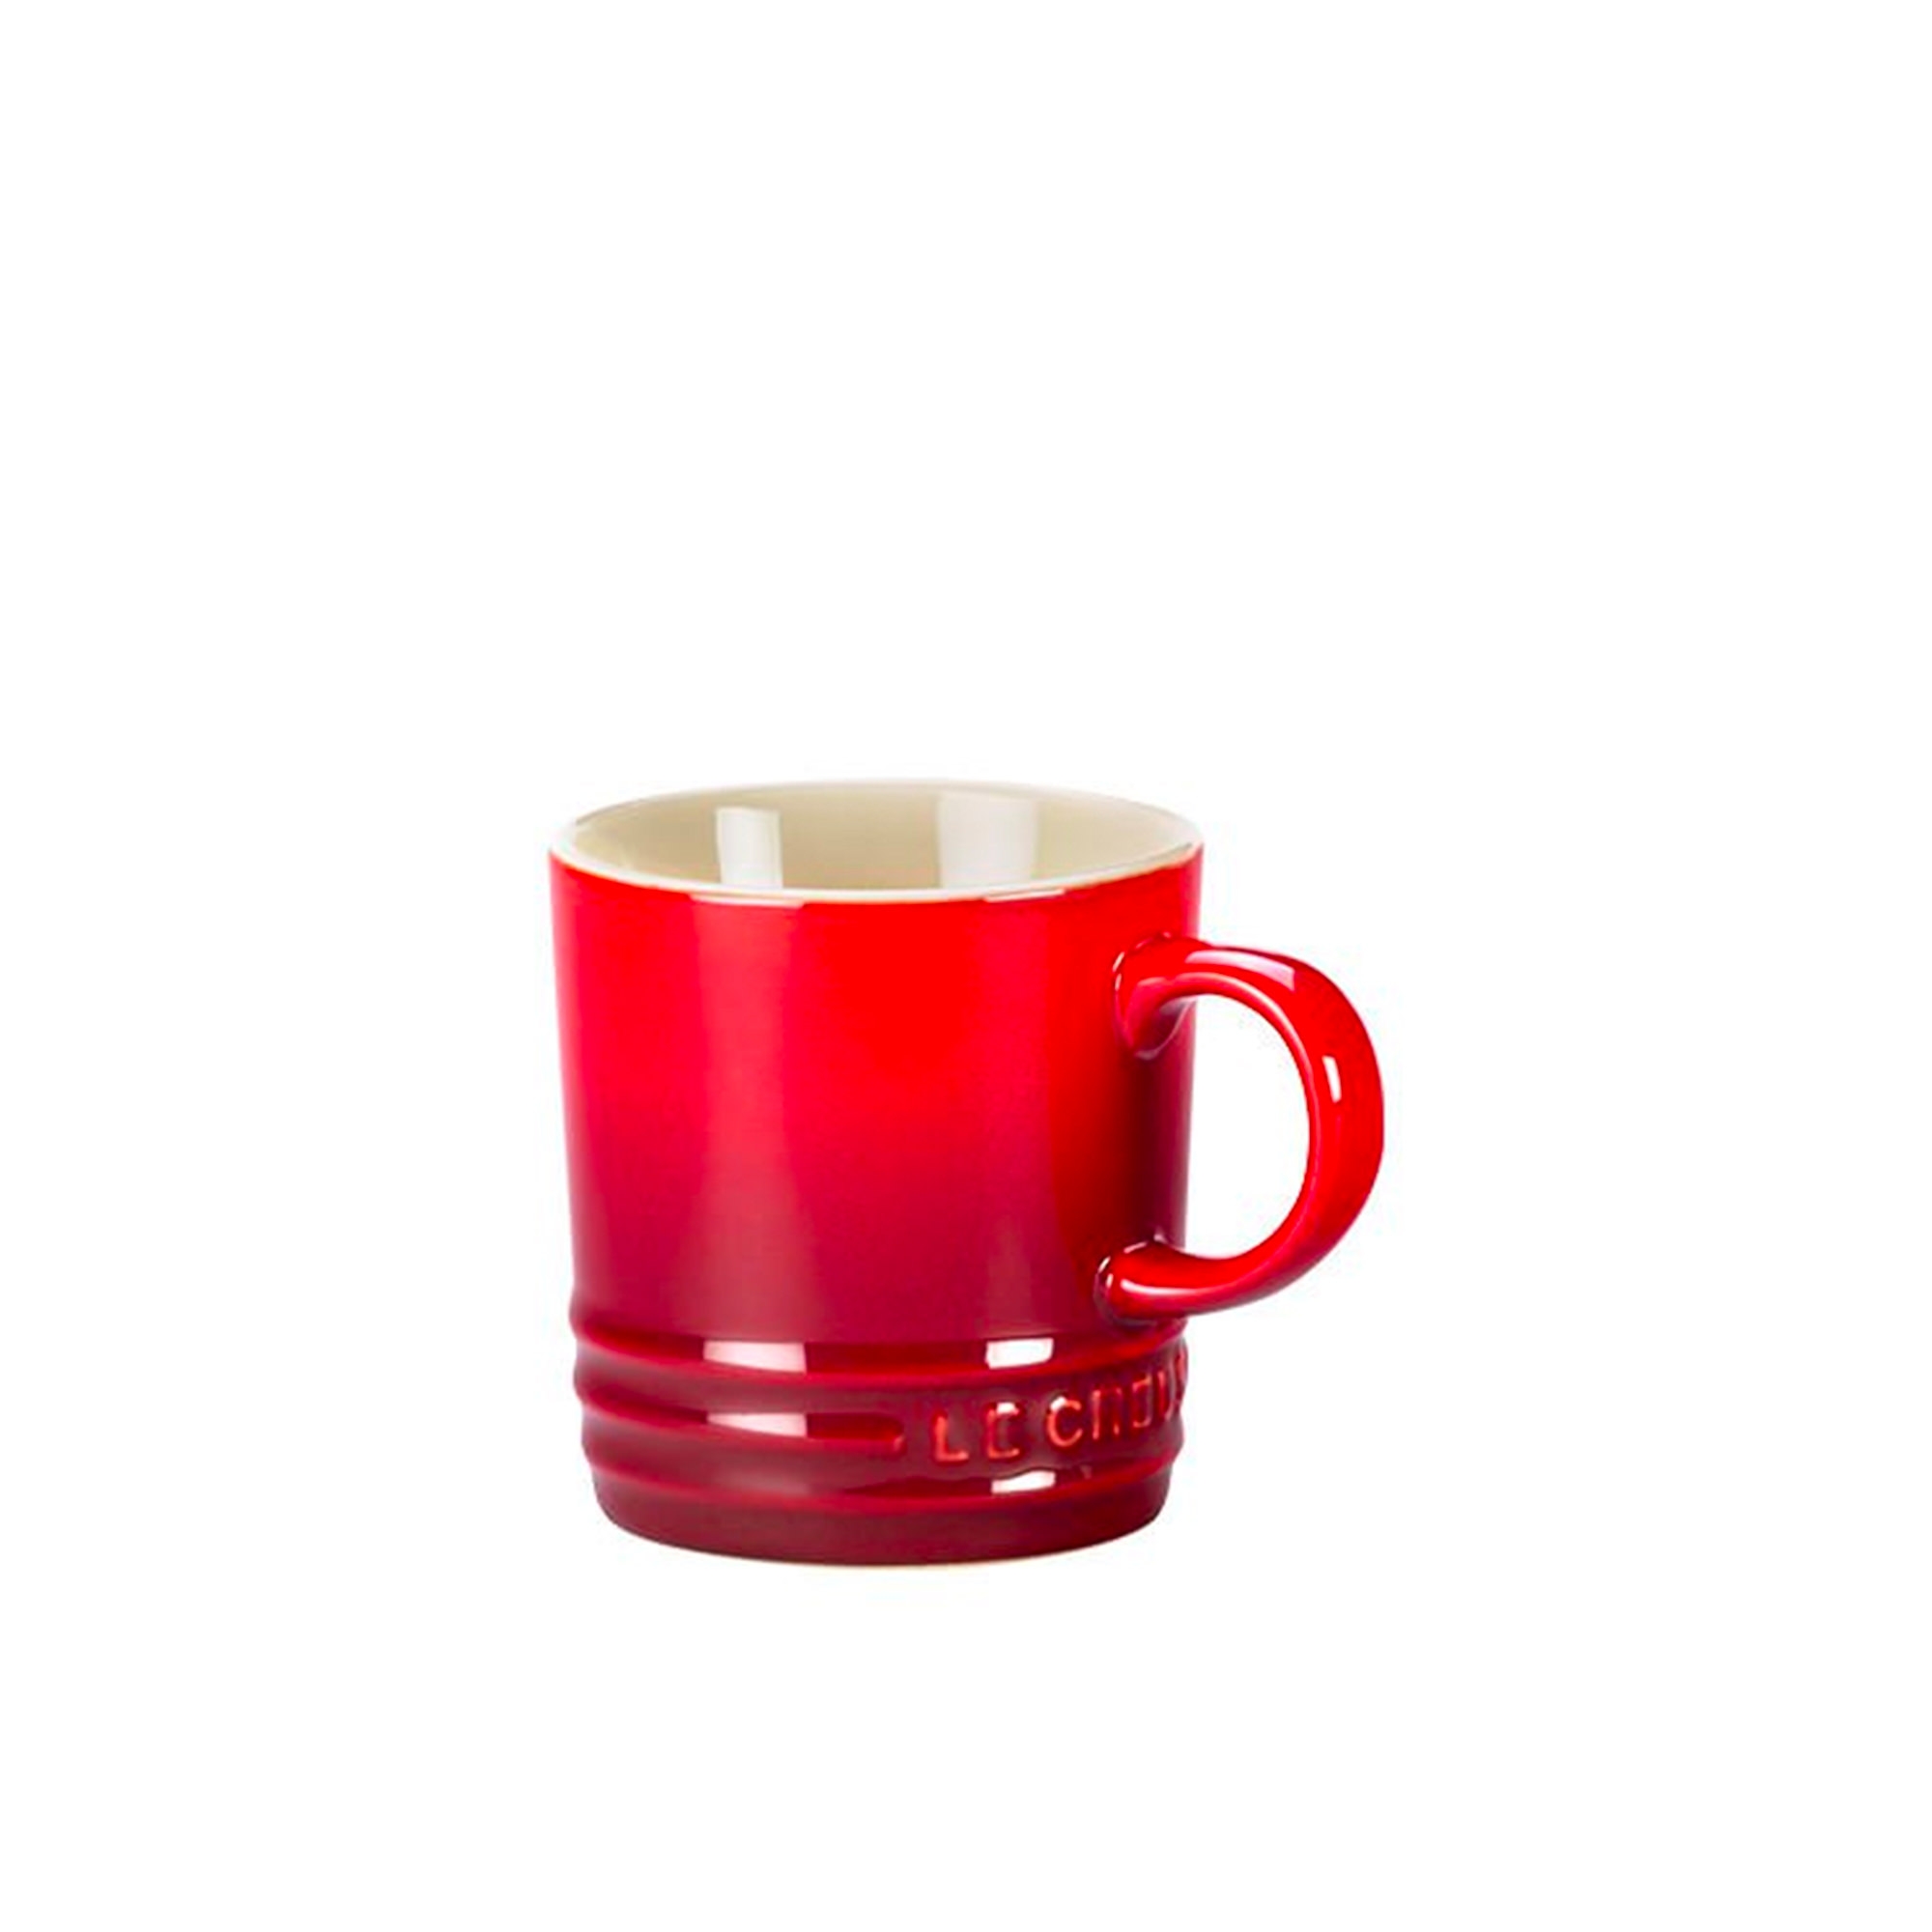 Le Creuset Stoneware Espresso Mug 100ml Cerise Image 1